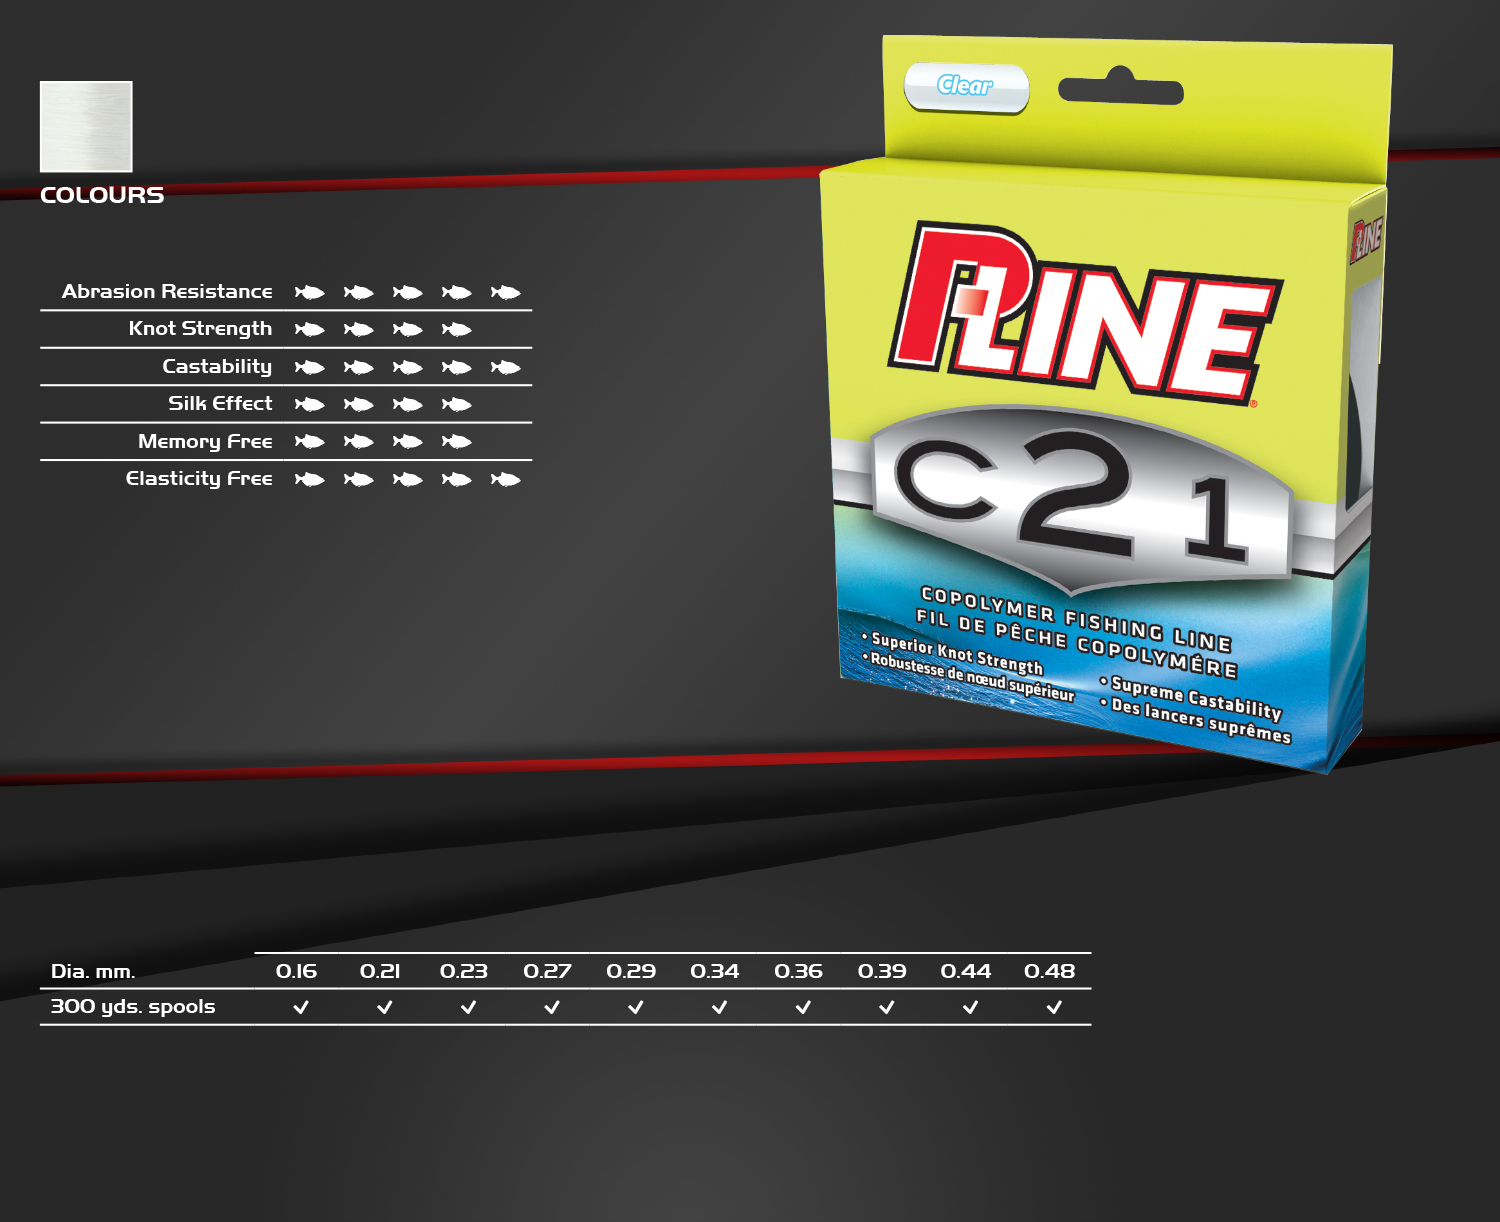 P-Line C21 Copolymer Fishing Line